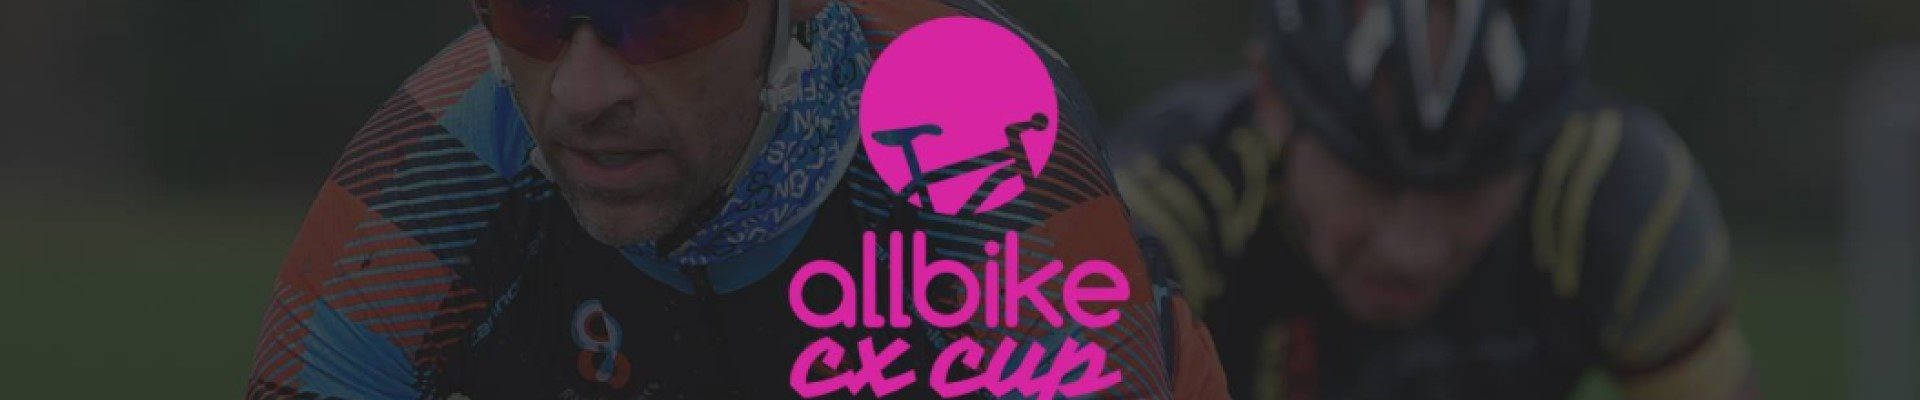 Allbike CX cup 19/20 #3 (Uldum)